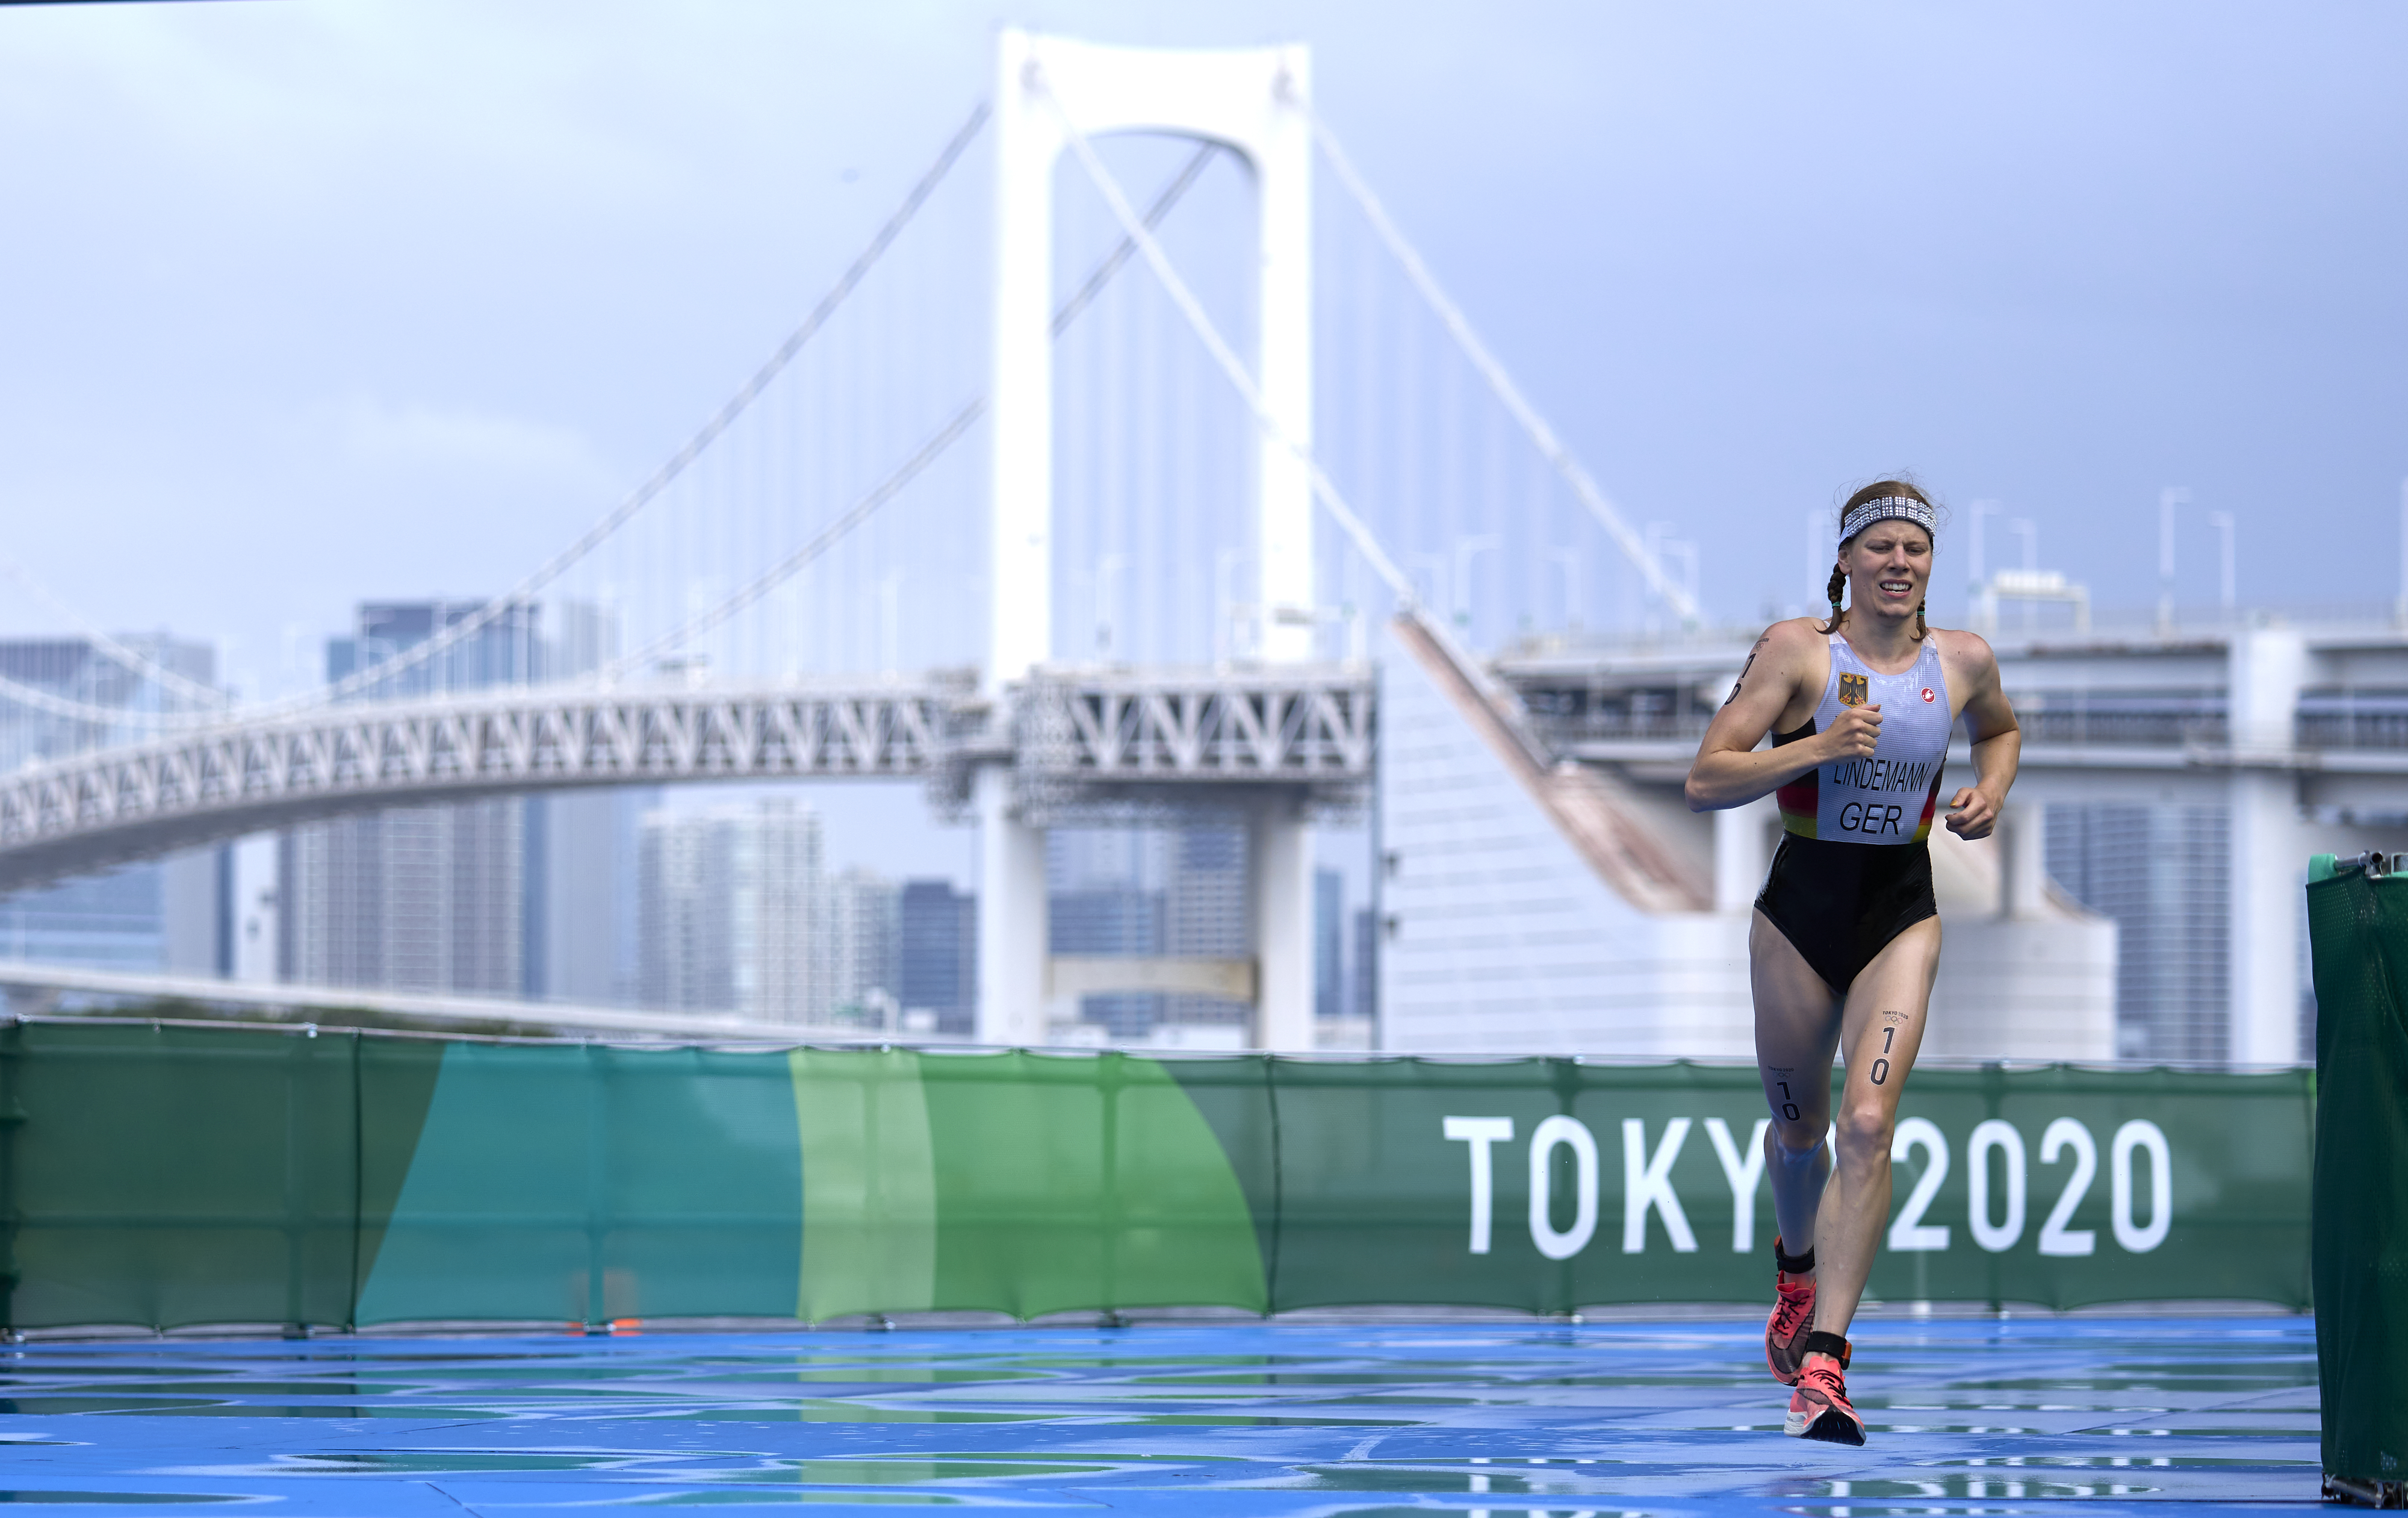 lindemann runs in the run leg of the tokyo 2020 olympics